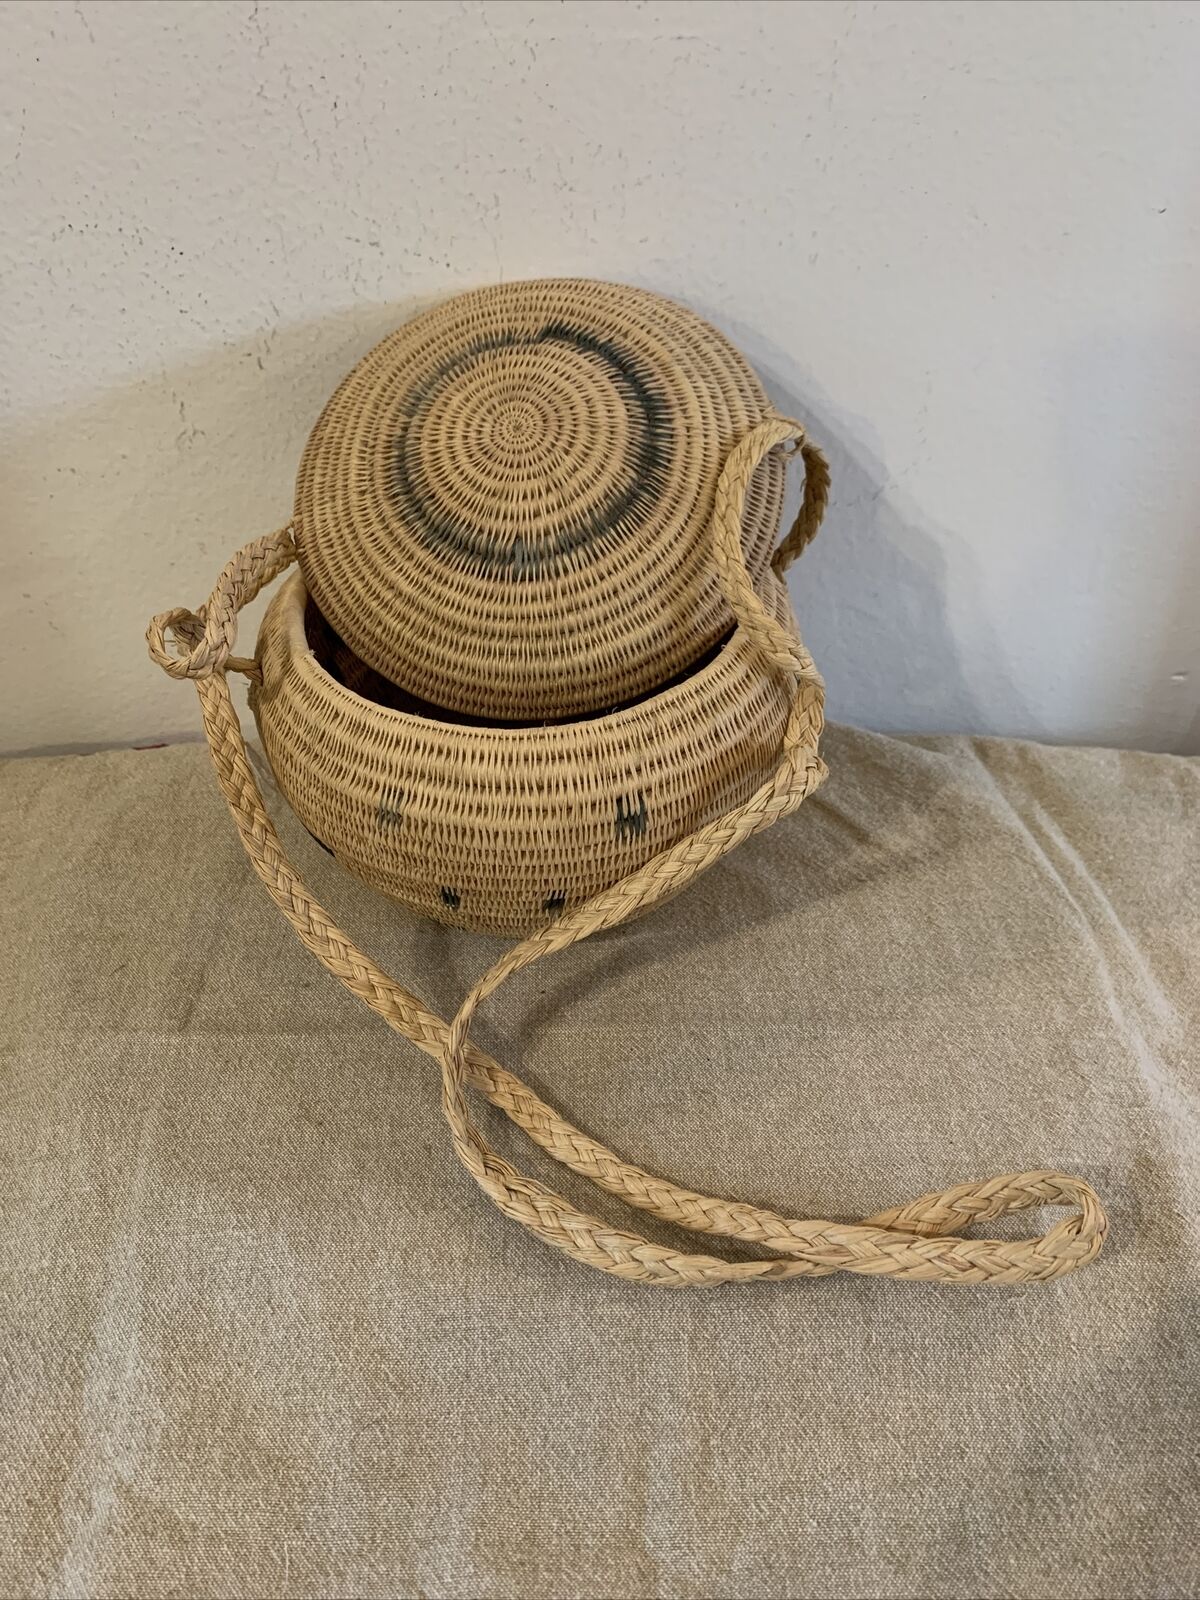 Hand Made Straw Small Lidded Basket w Long Braided Strap Purse Charleston’s?